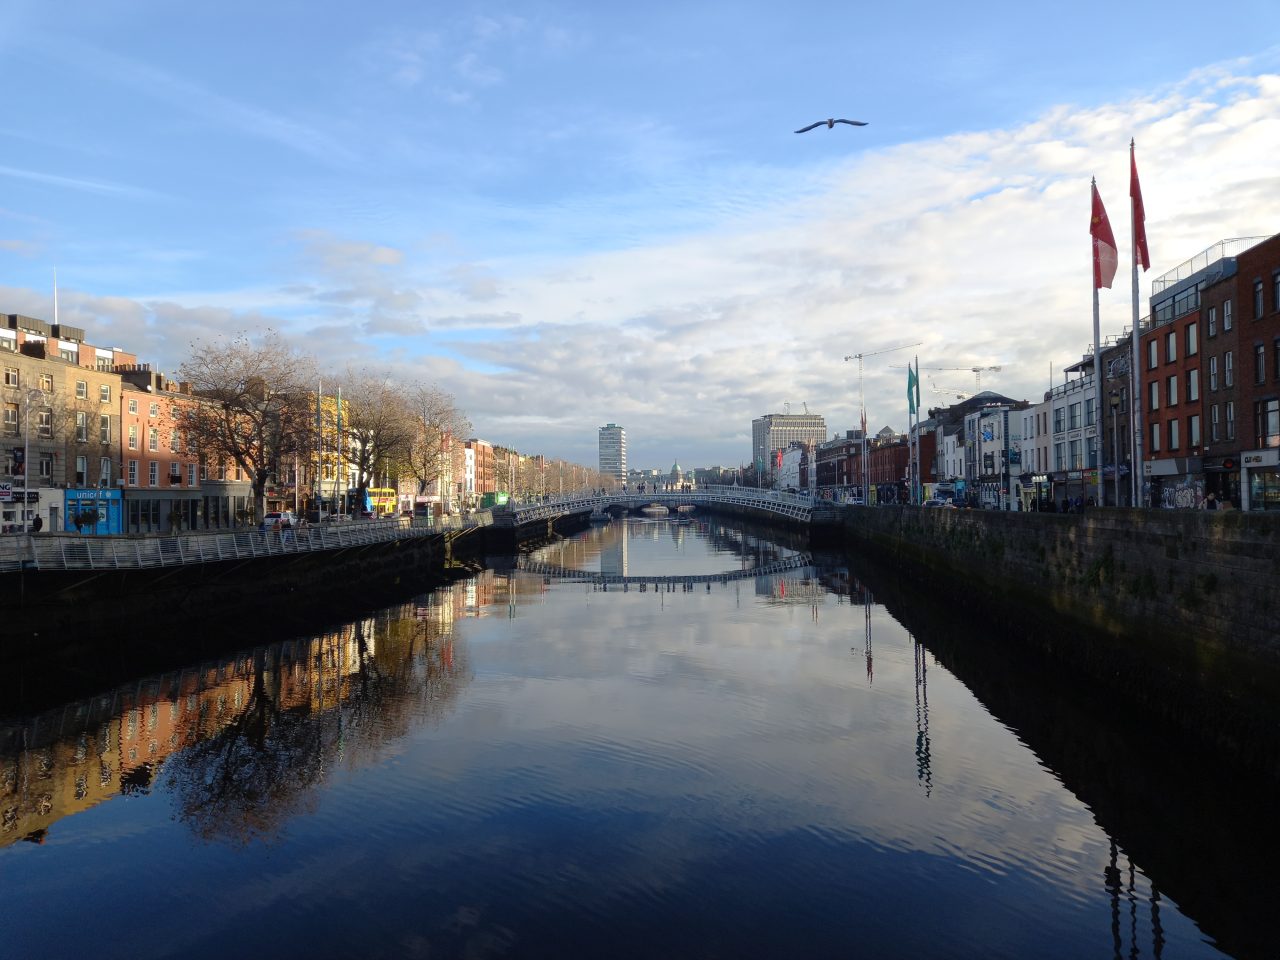 The River Liffey, Ha'penny Bridge, Dublin 1 and Dublin 2